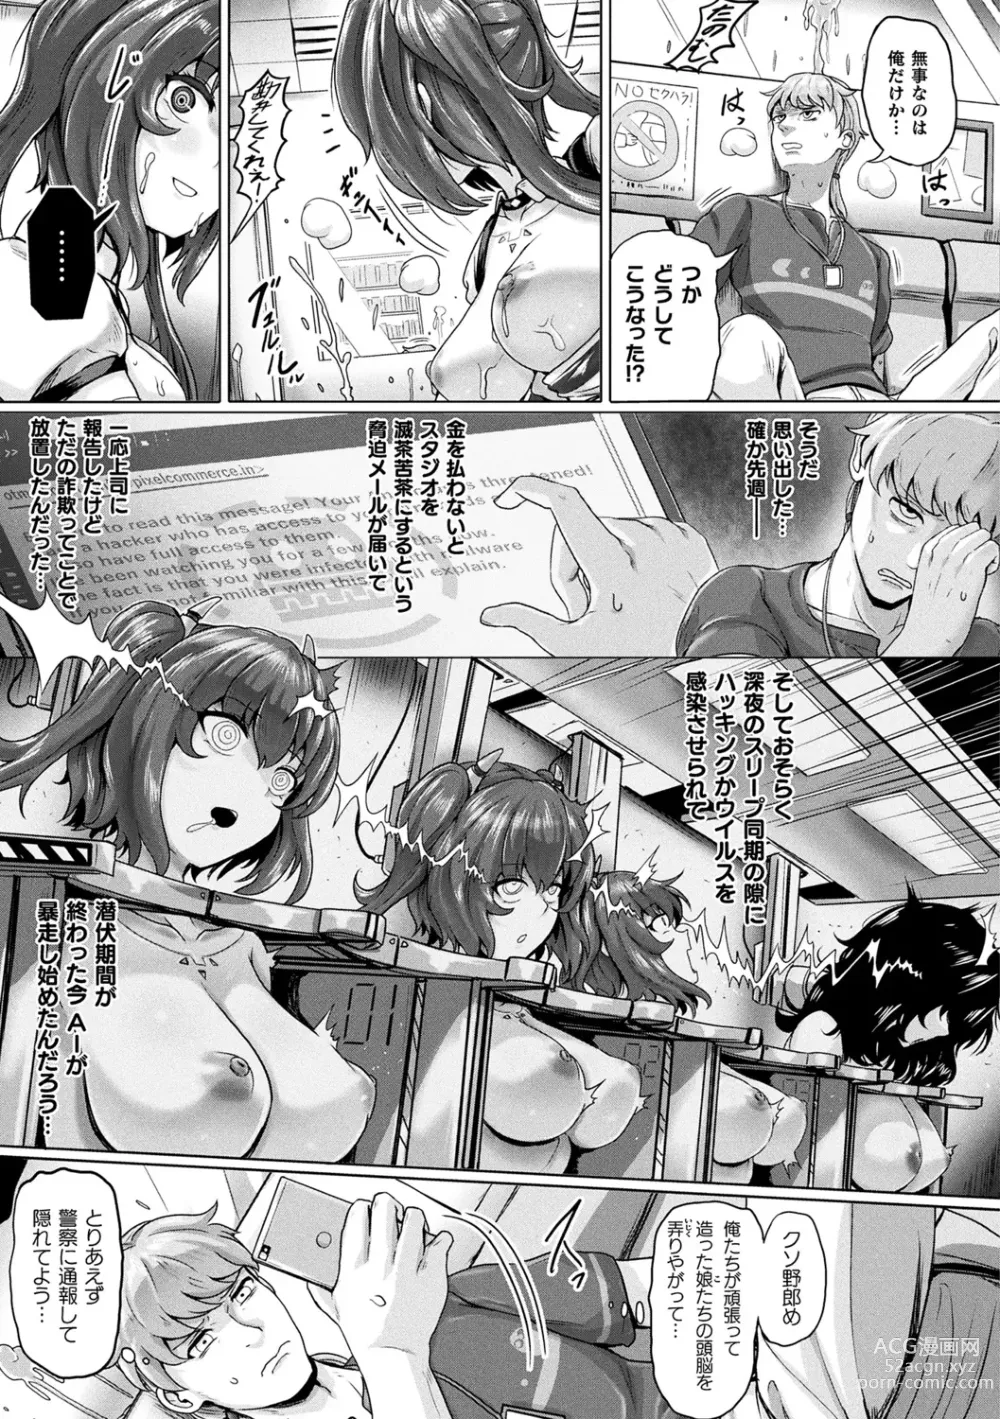 Page 7 of manga Mechanical Desire